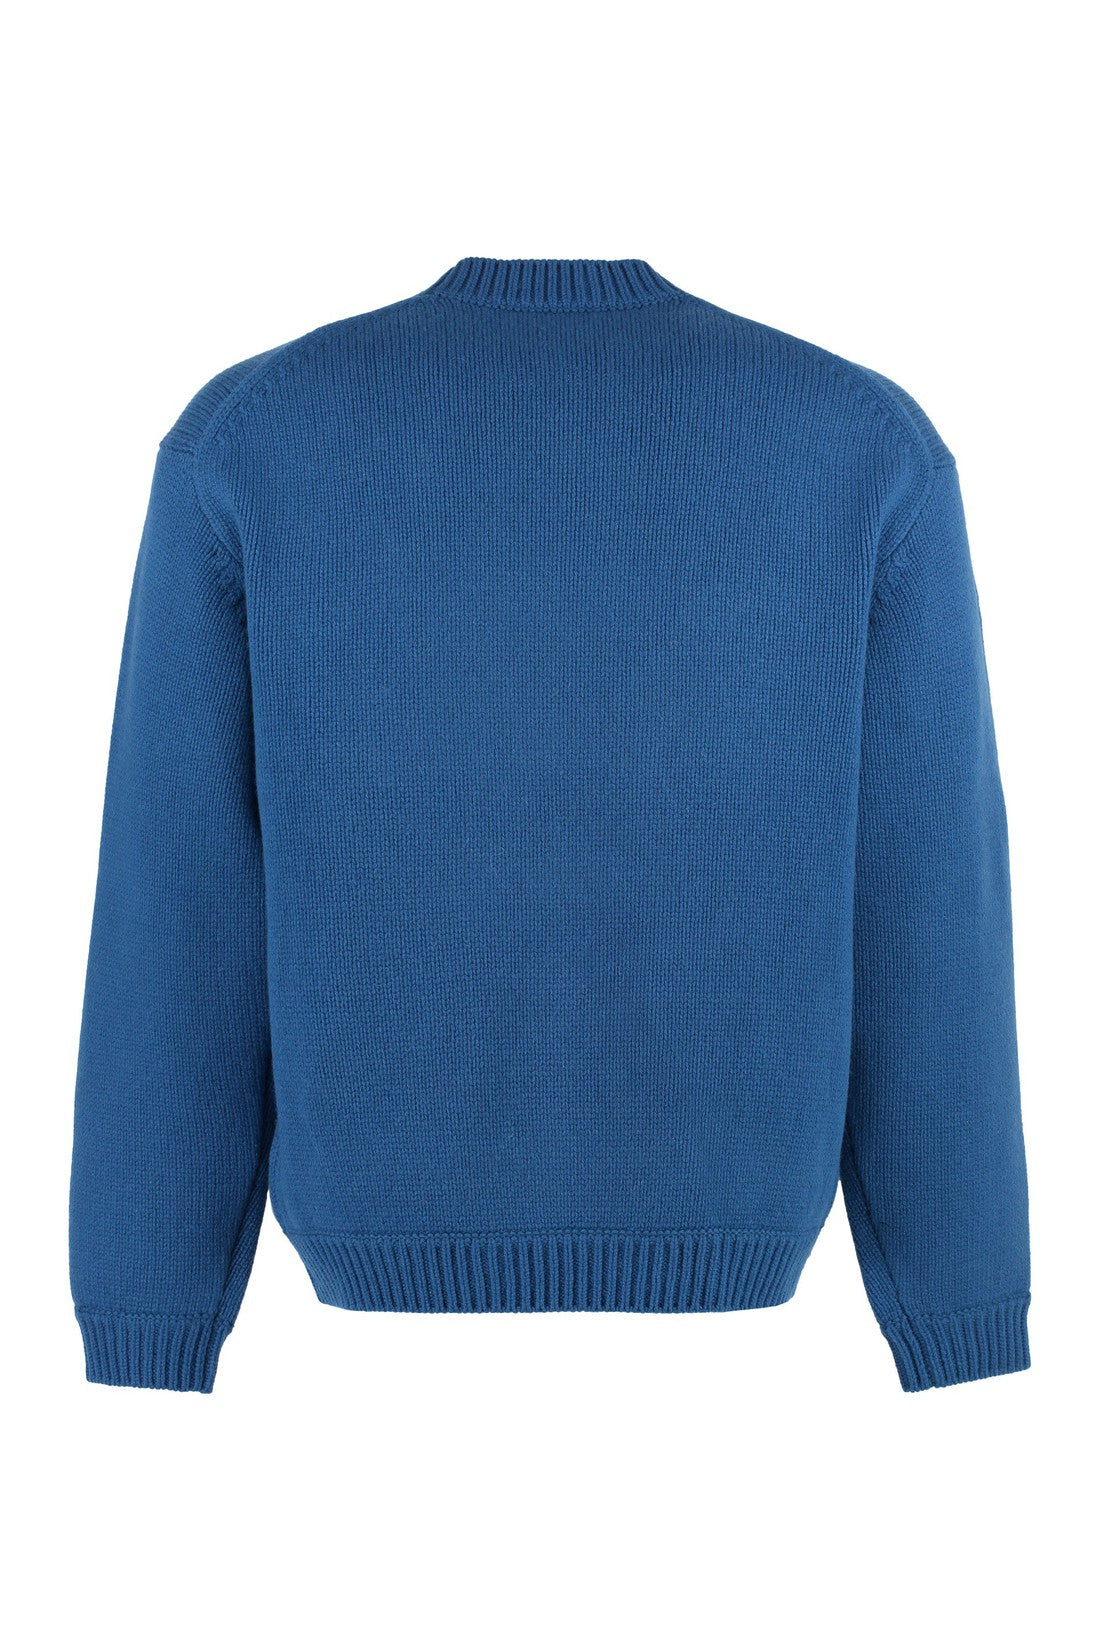 Kenzo-OUTLET-SALE-Wool-cotton blend crew-neck sweater-ARCHIVIST